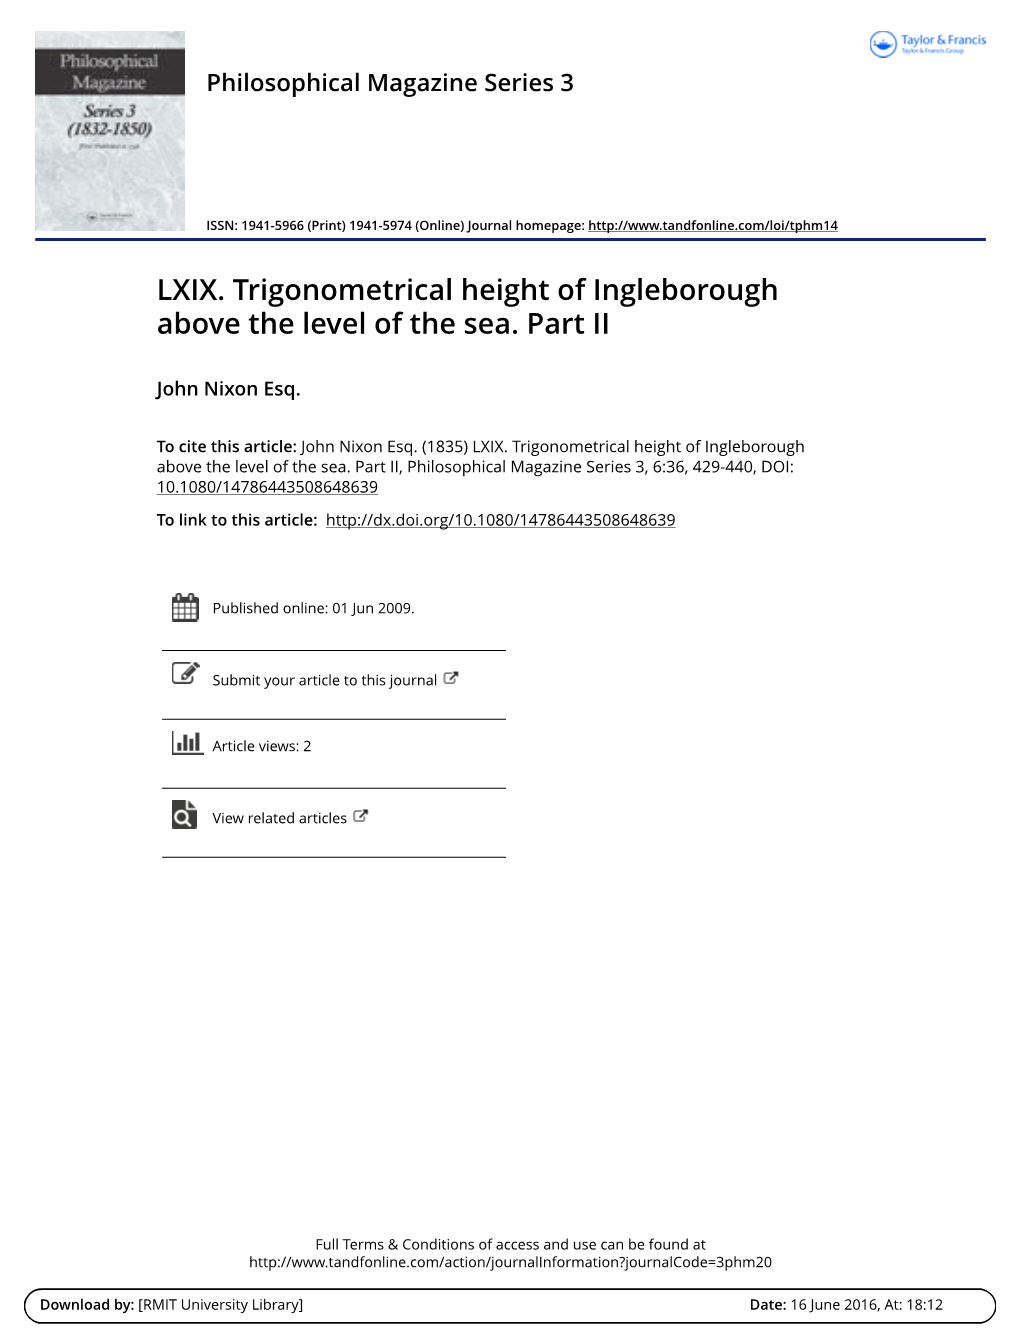 LXIX. Trigonometrical Height of Ingleborough Above the Level of the Sea